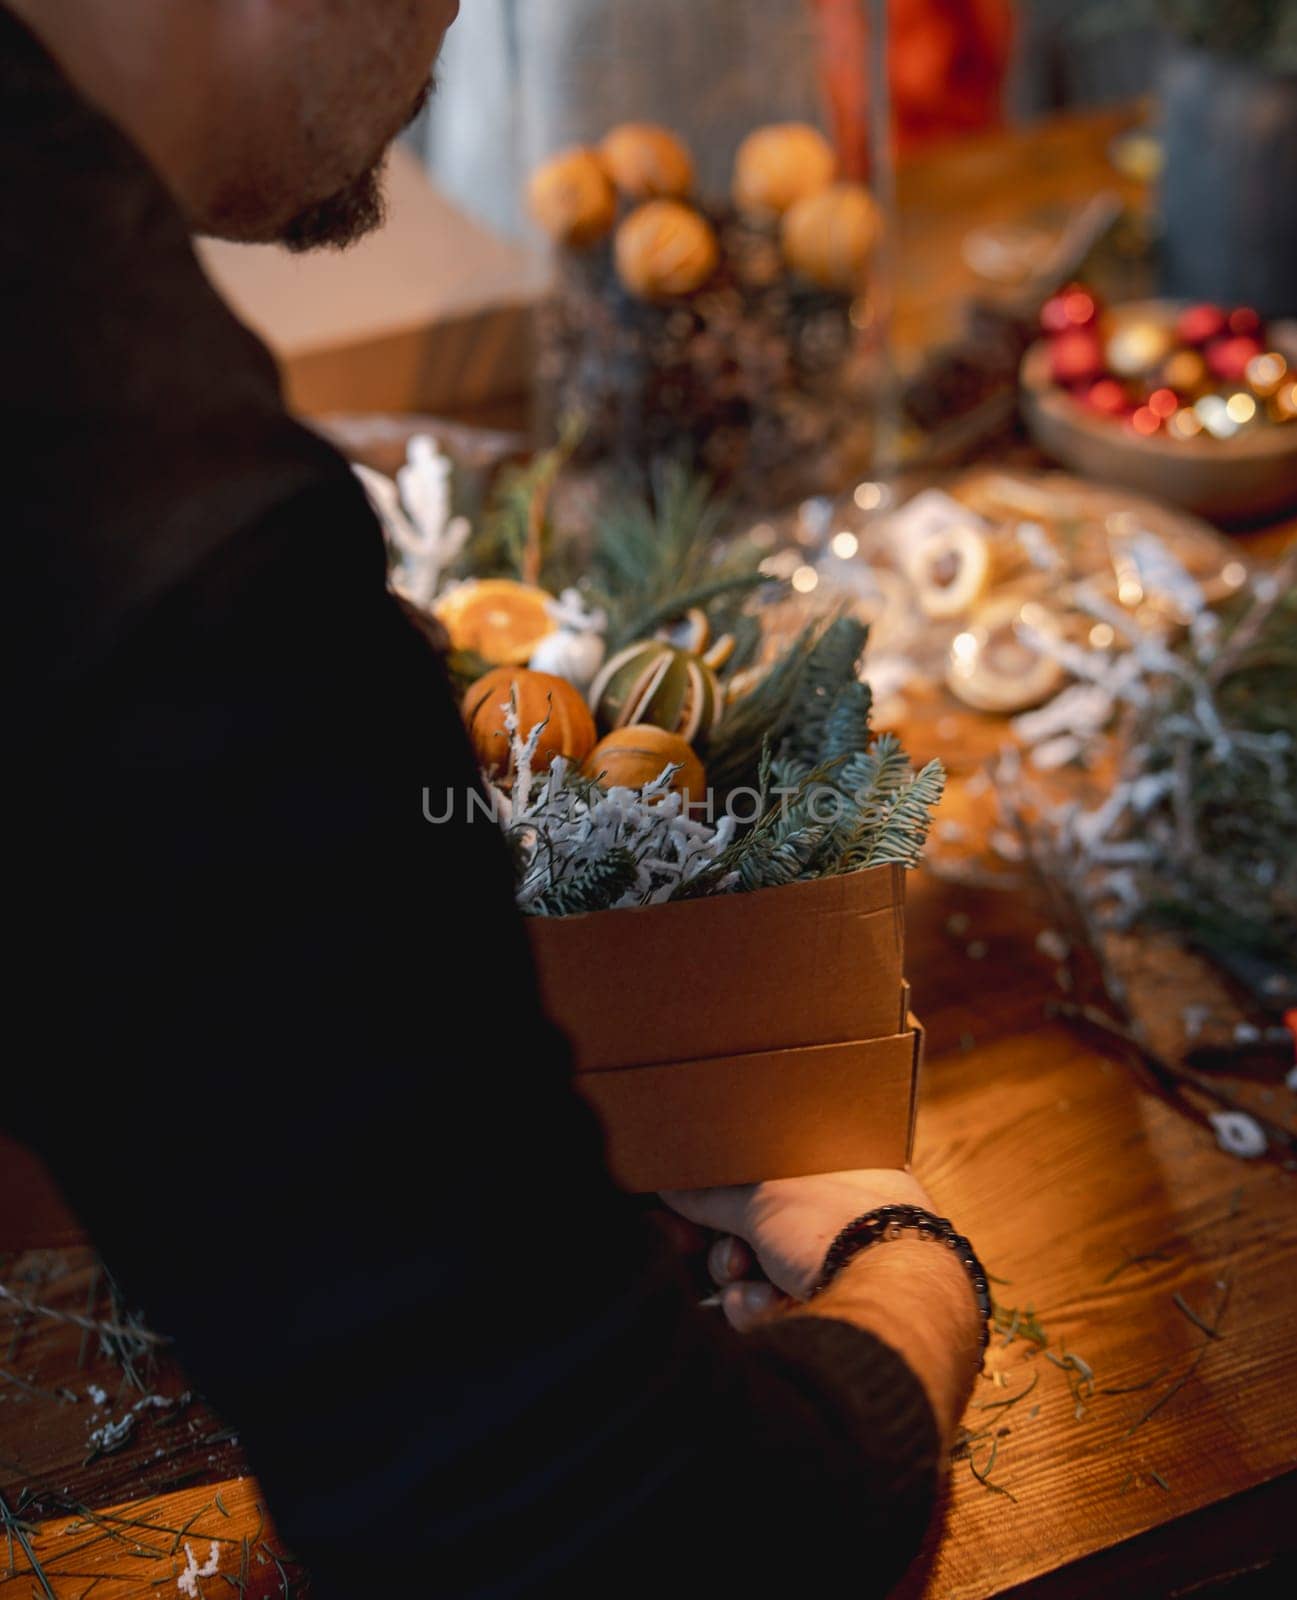 Festive ambiance at the flower and Christmas decor shop. by teksomolika